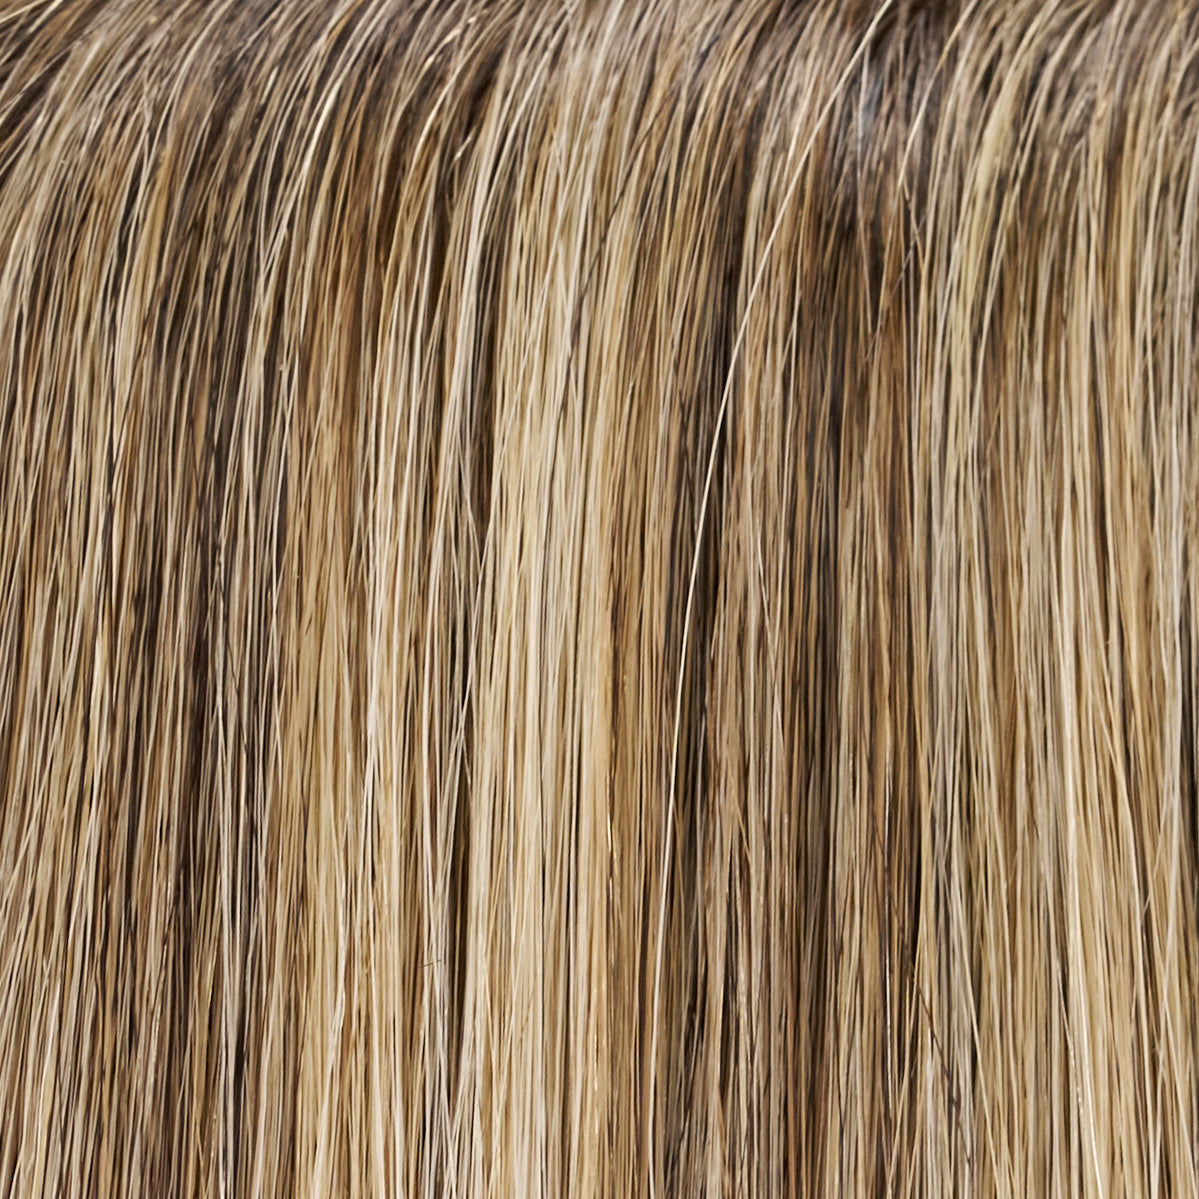 Brenna - Jon Renau Smartlace Human Hair